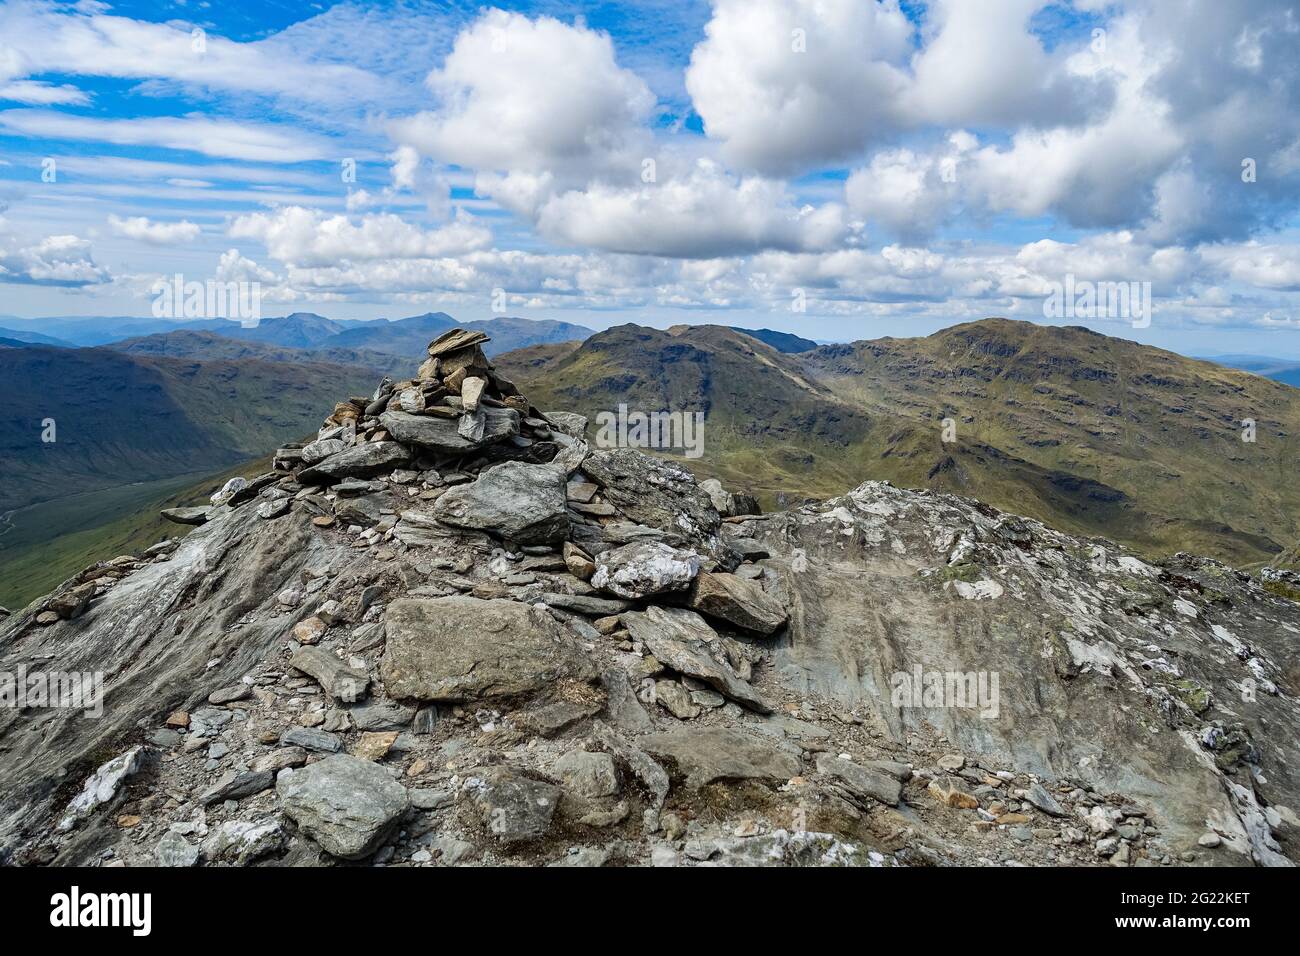 The summit cairn of the Munro mountain of Beinn Tulaichean near Crianlarich, Scotland Stock Photo